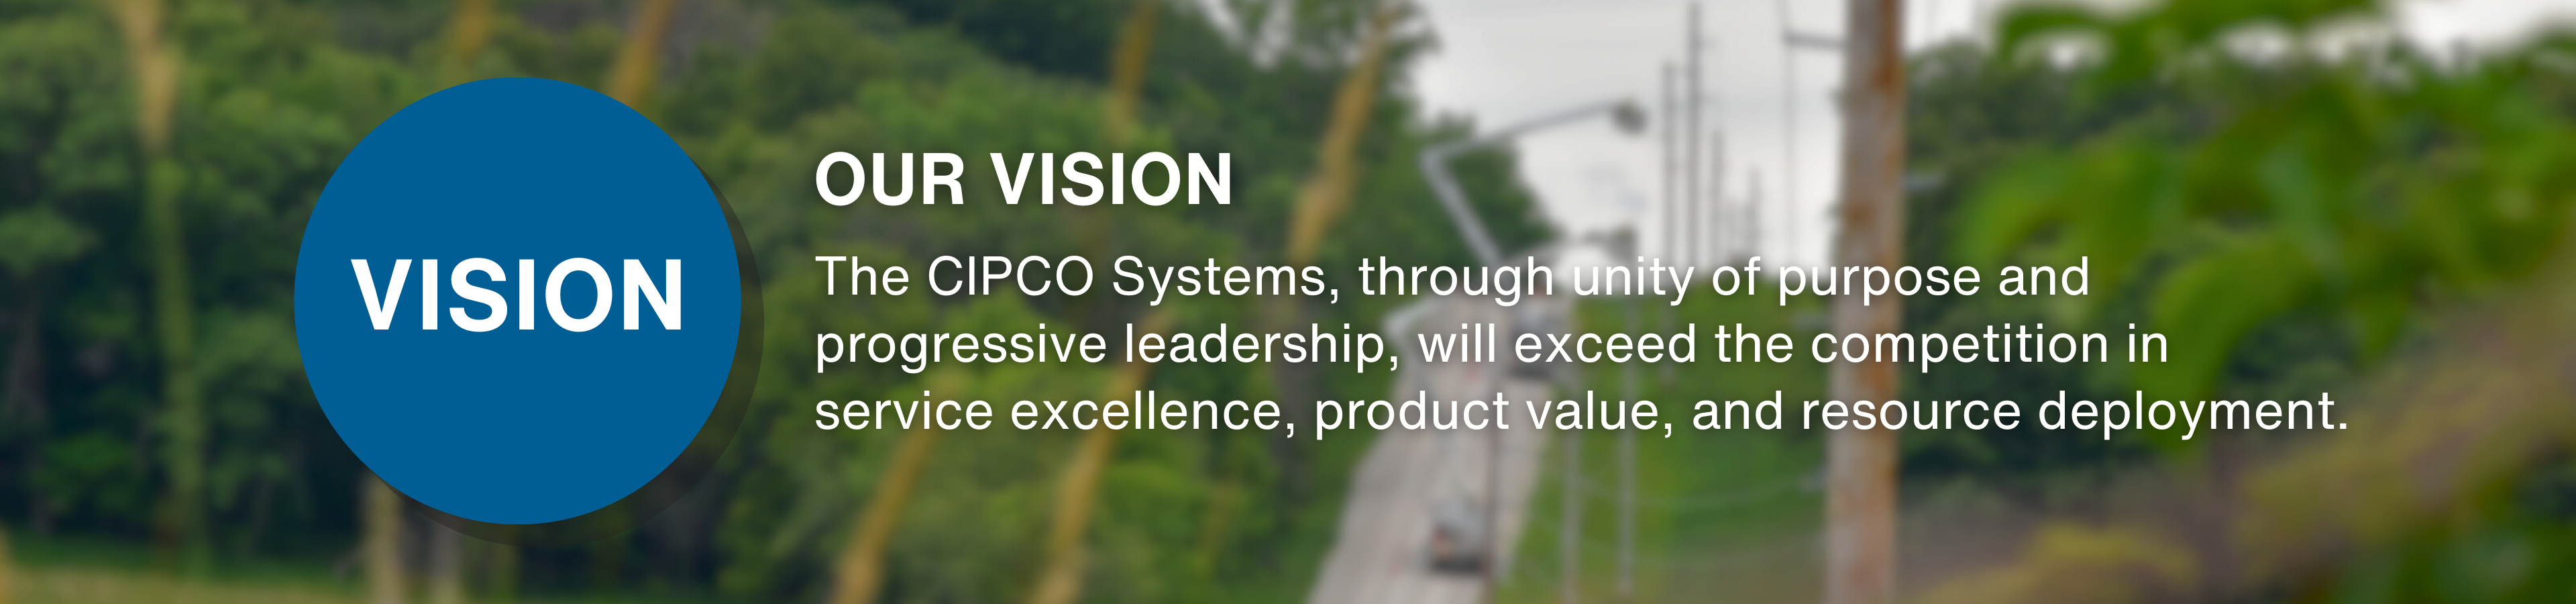 CIPCO Vision Statement